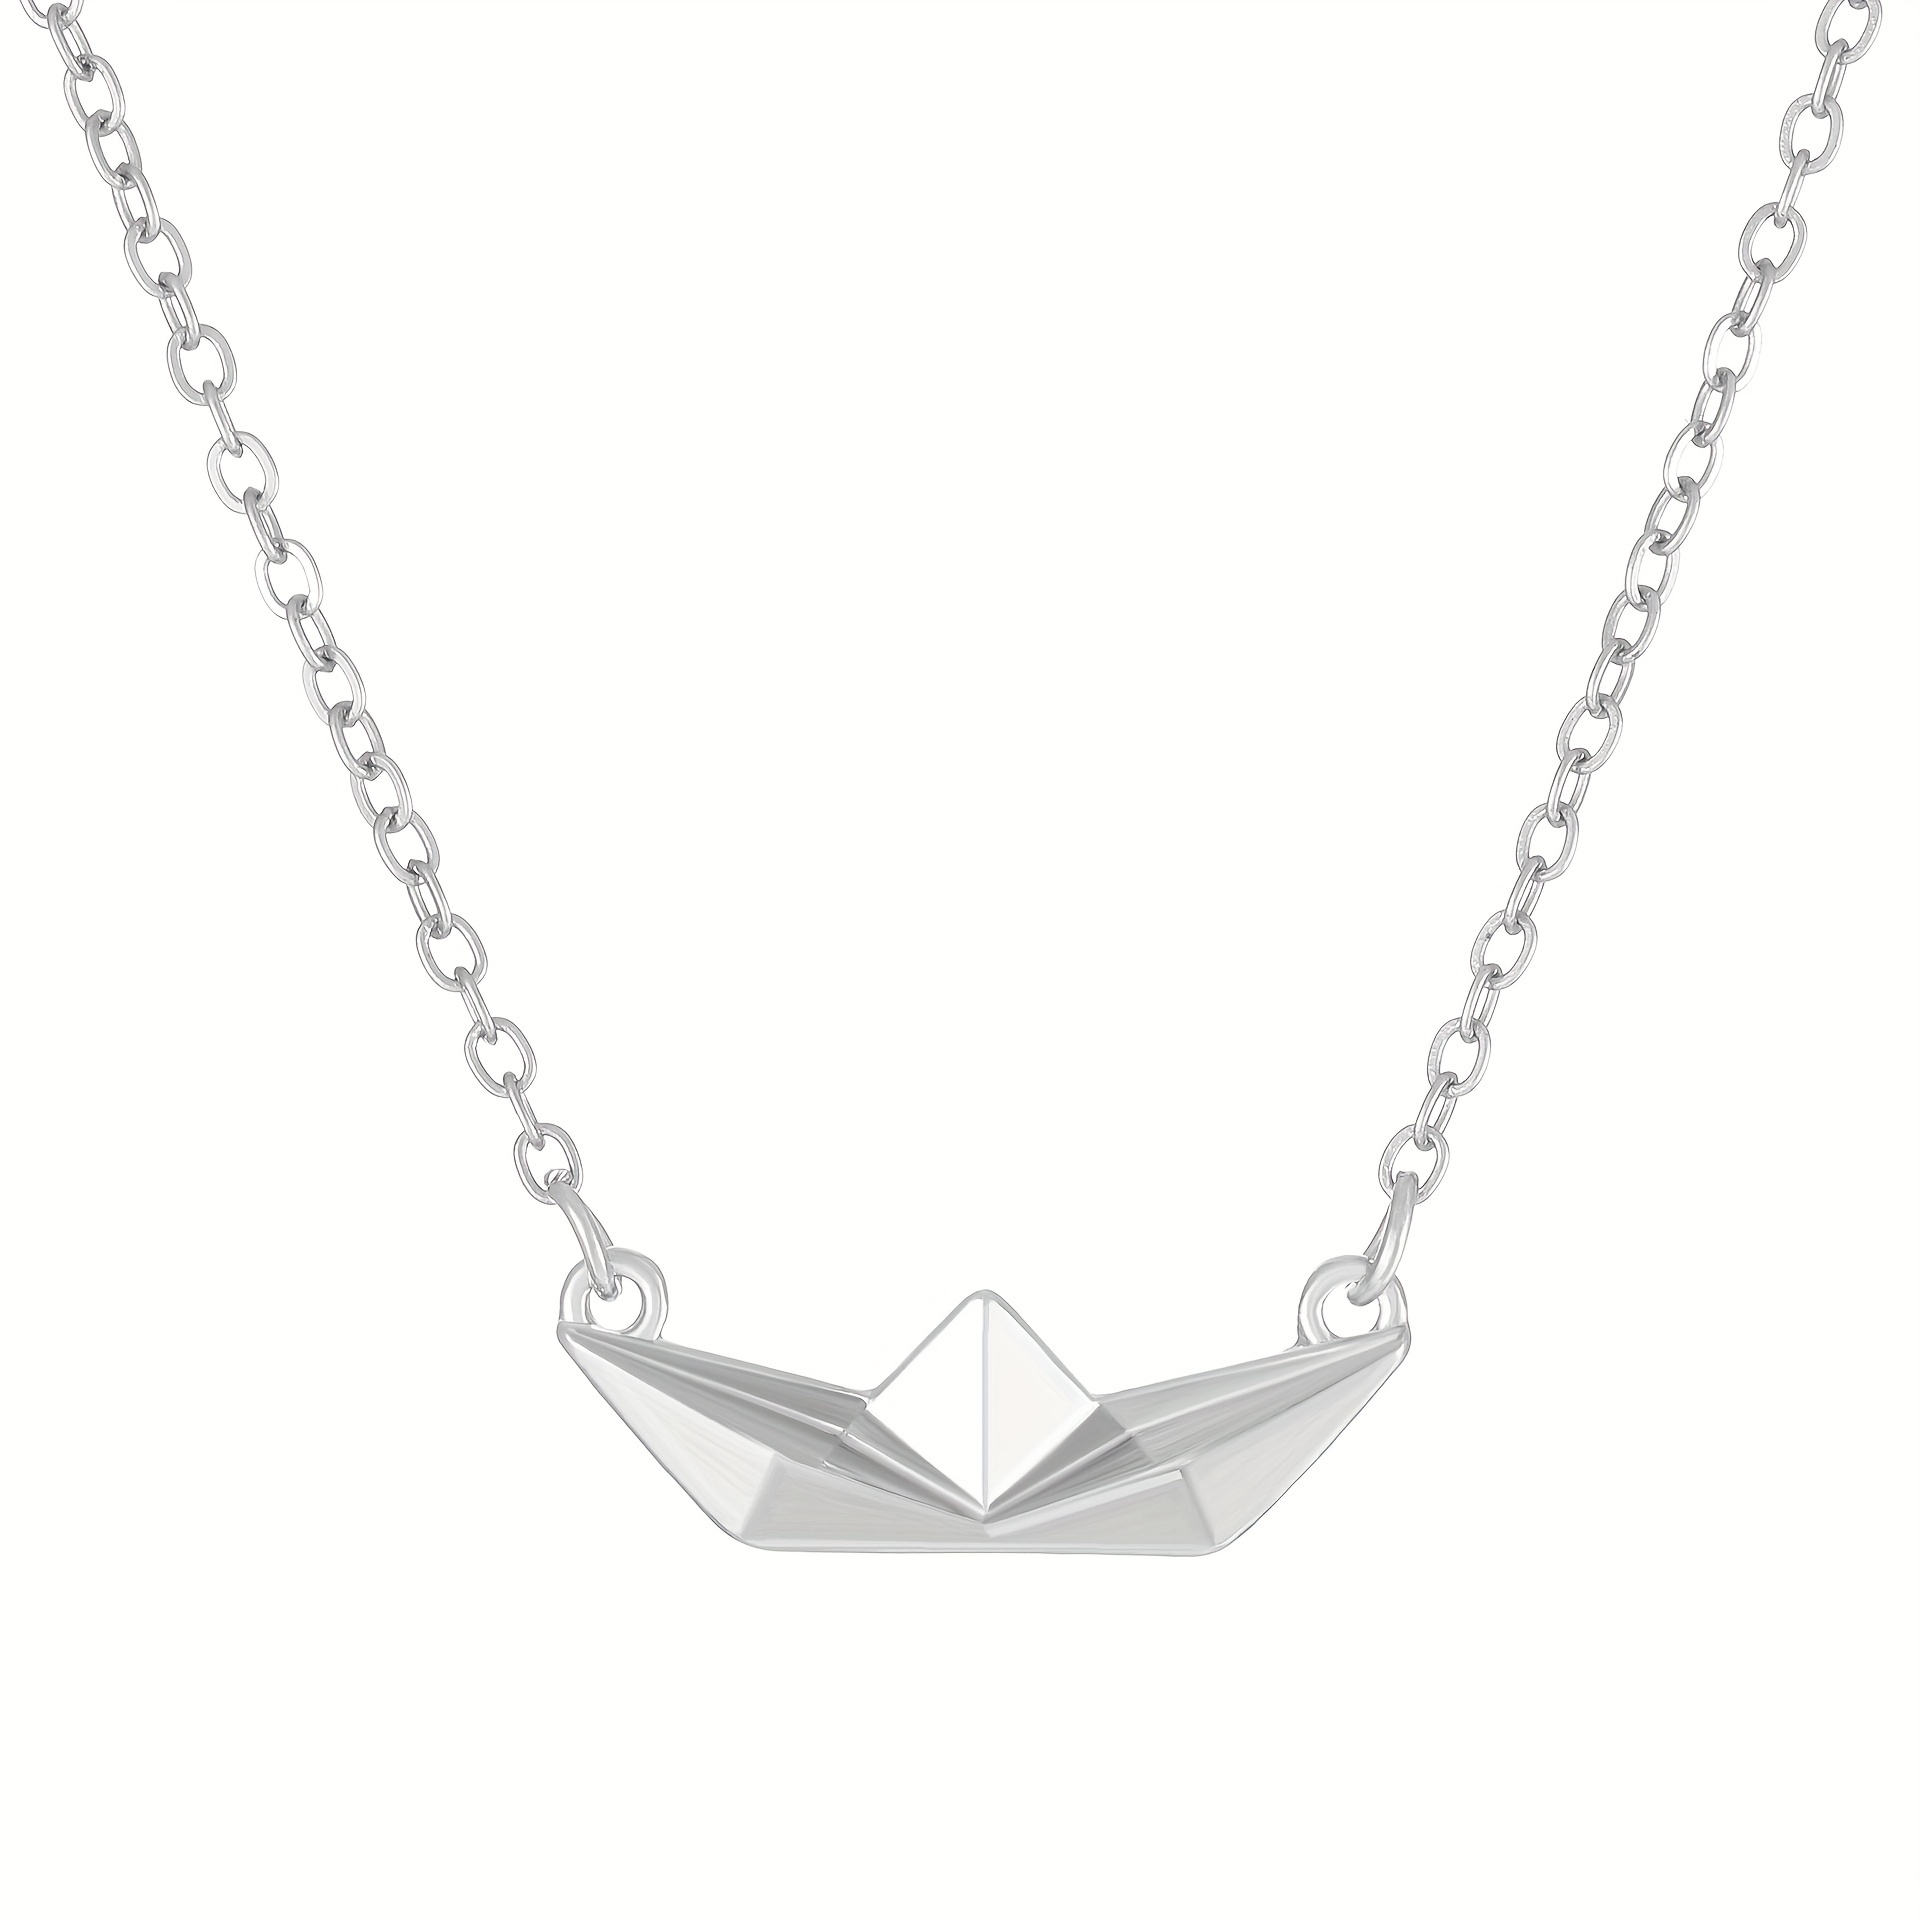 Origami Plane Necklace Airplane Pendant Origami Jewelry 